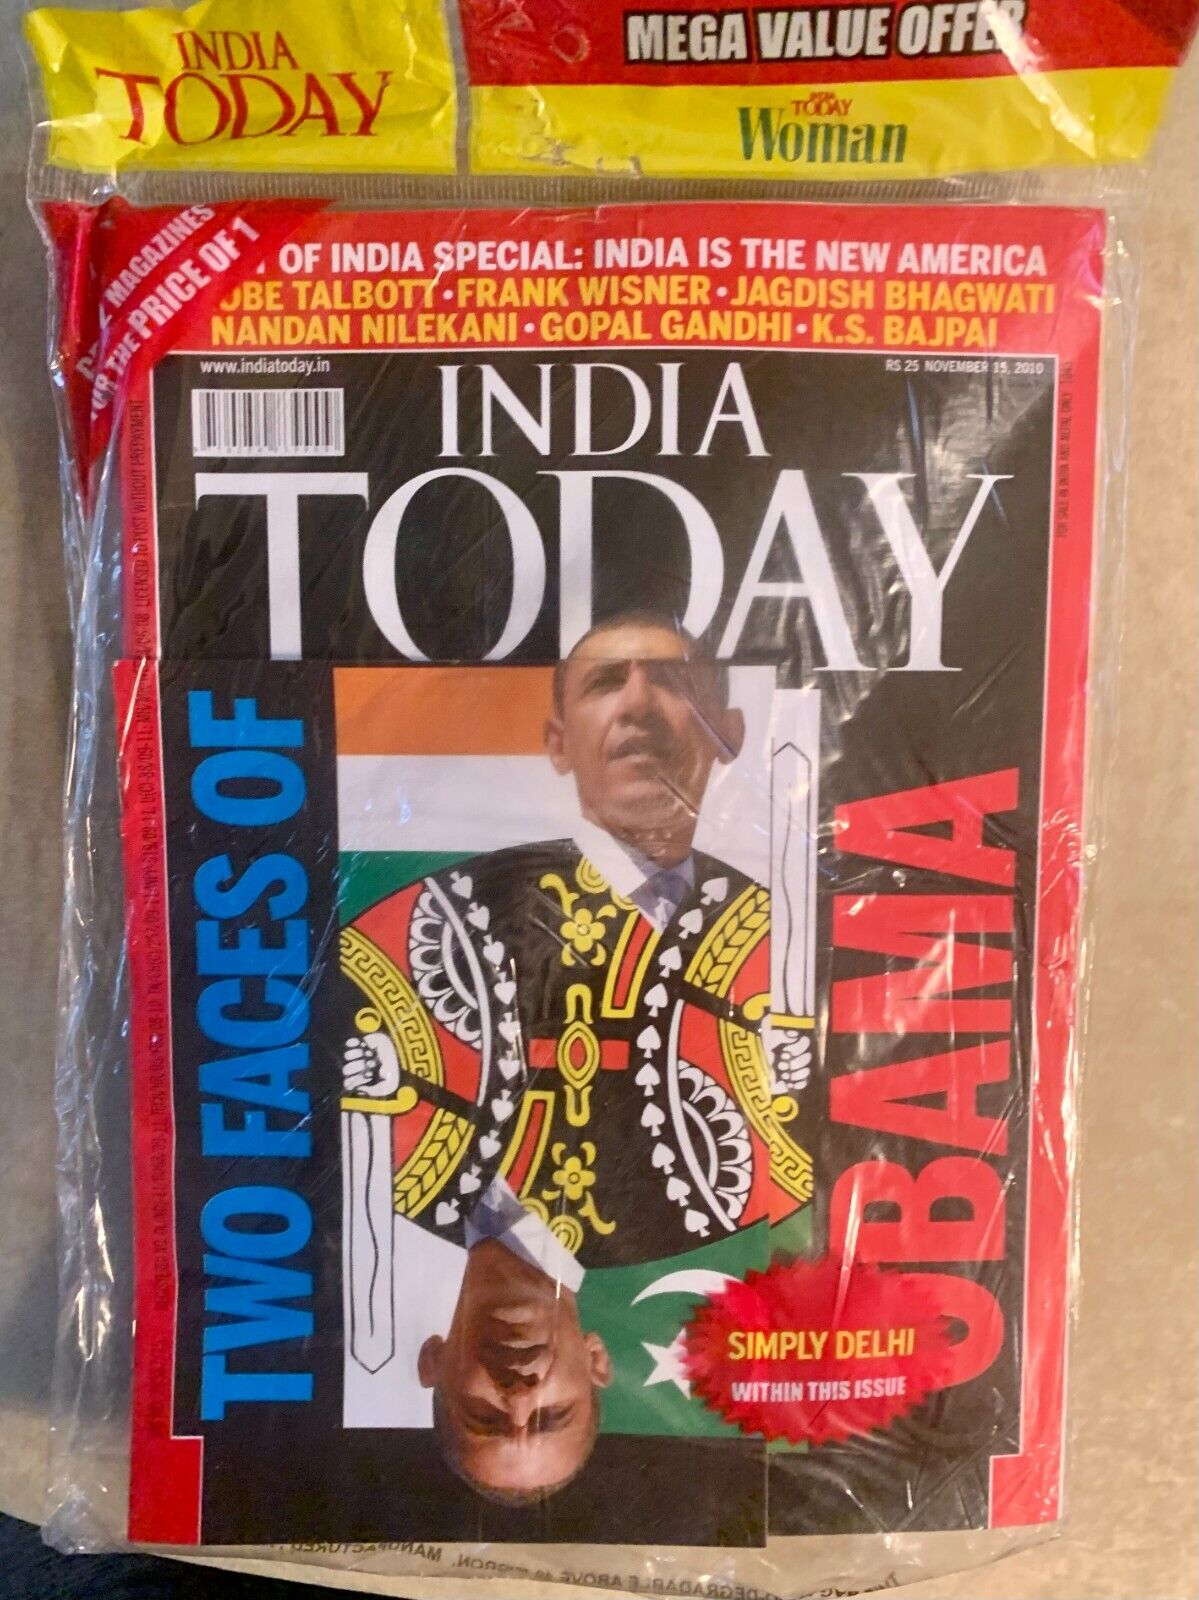 Obama on cover of India Today Magazine Nov 15 2010 unopened.